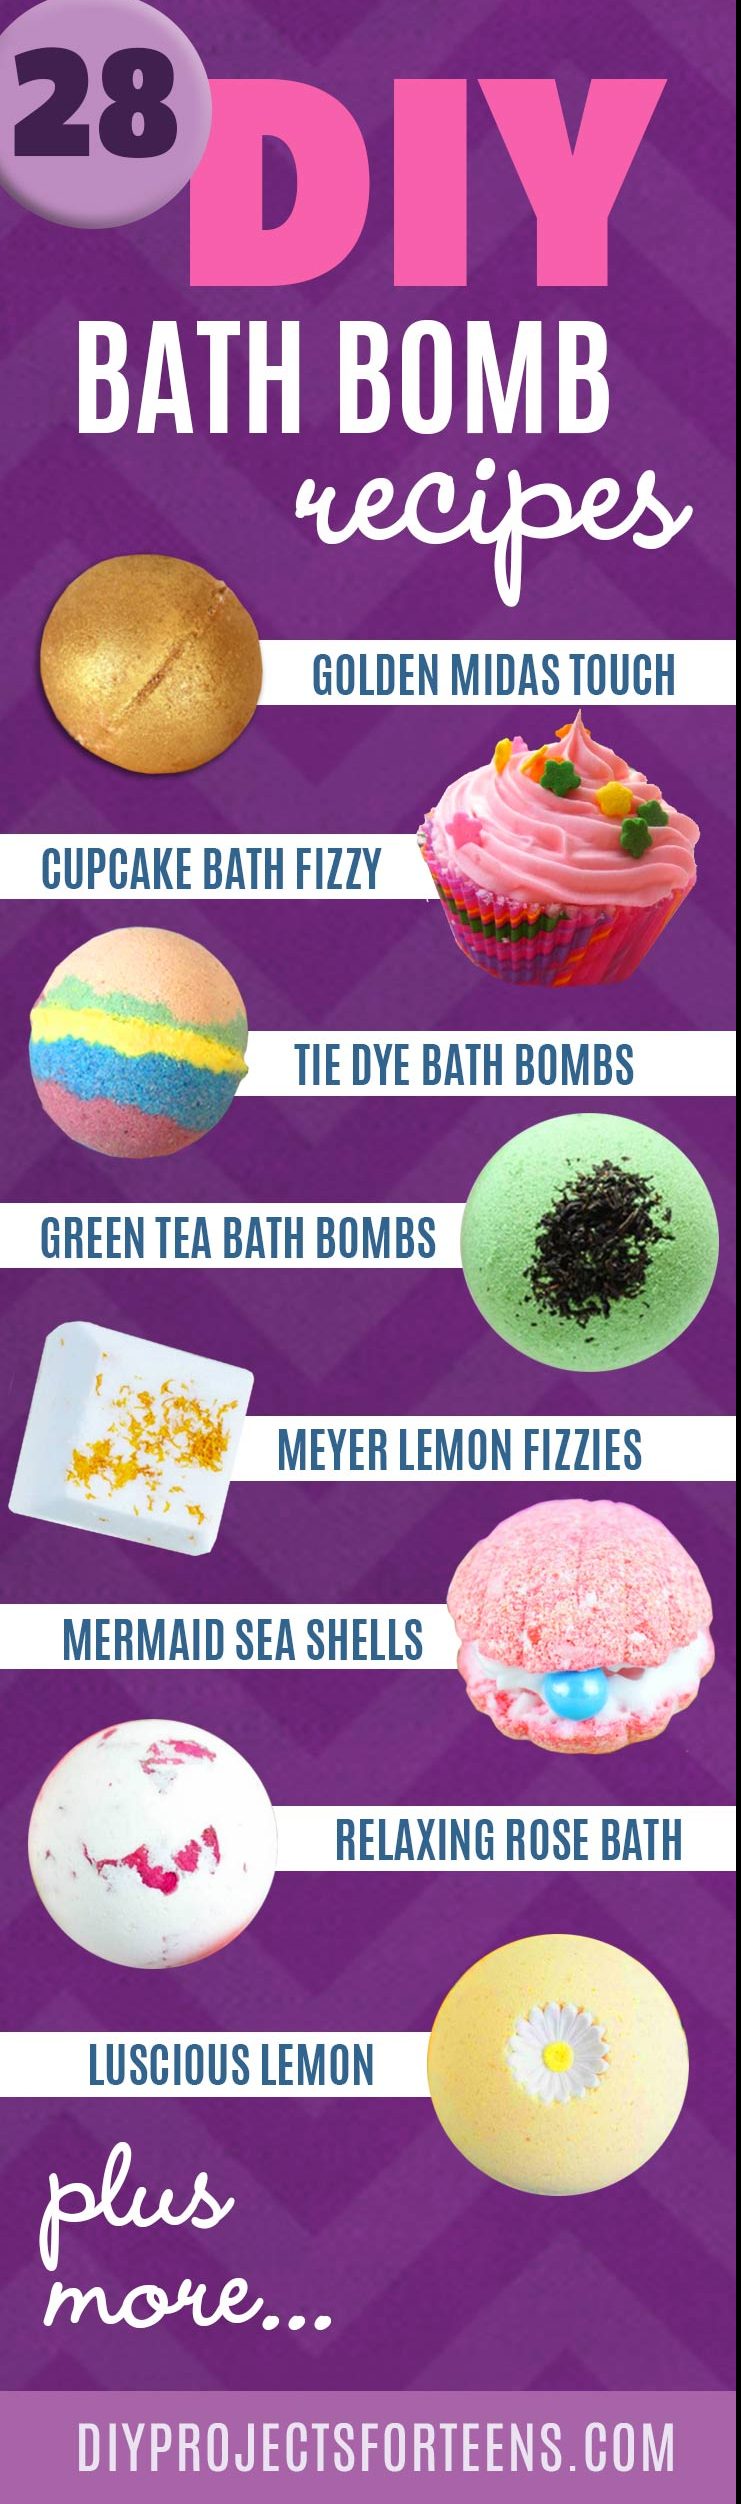 28 DIY Bath Bomb Recipes That Get Really Creative